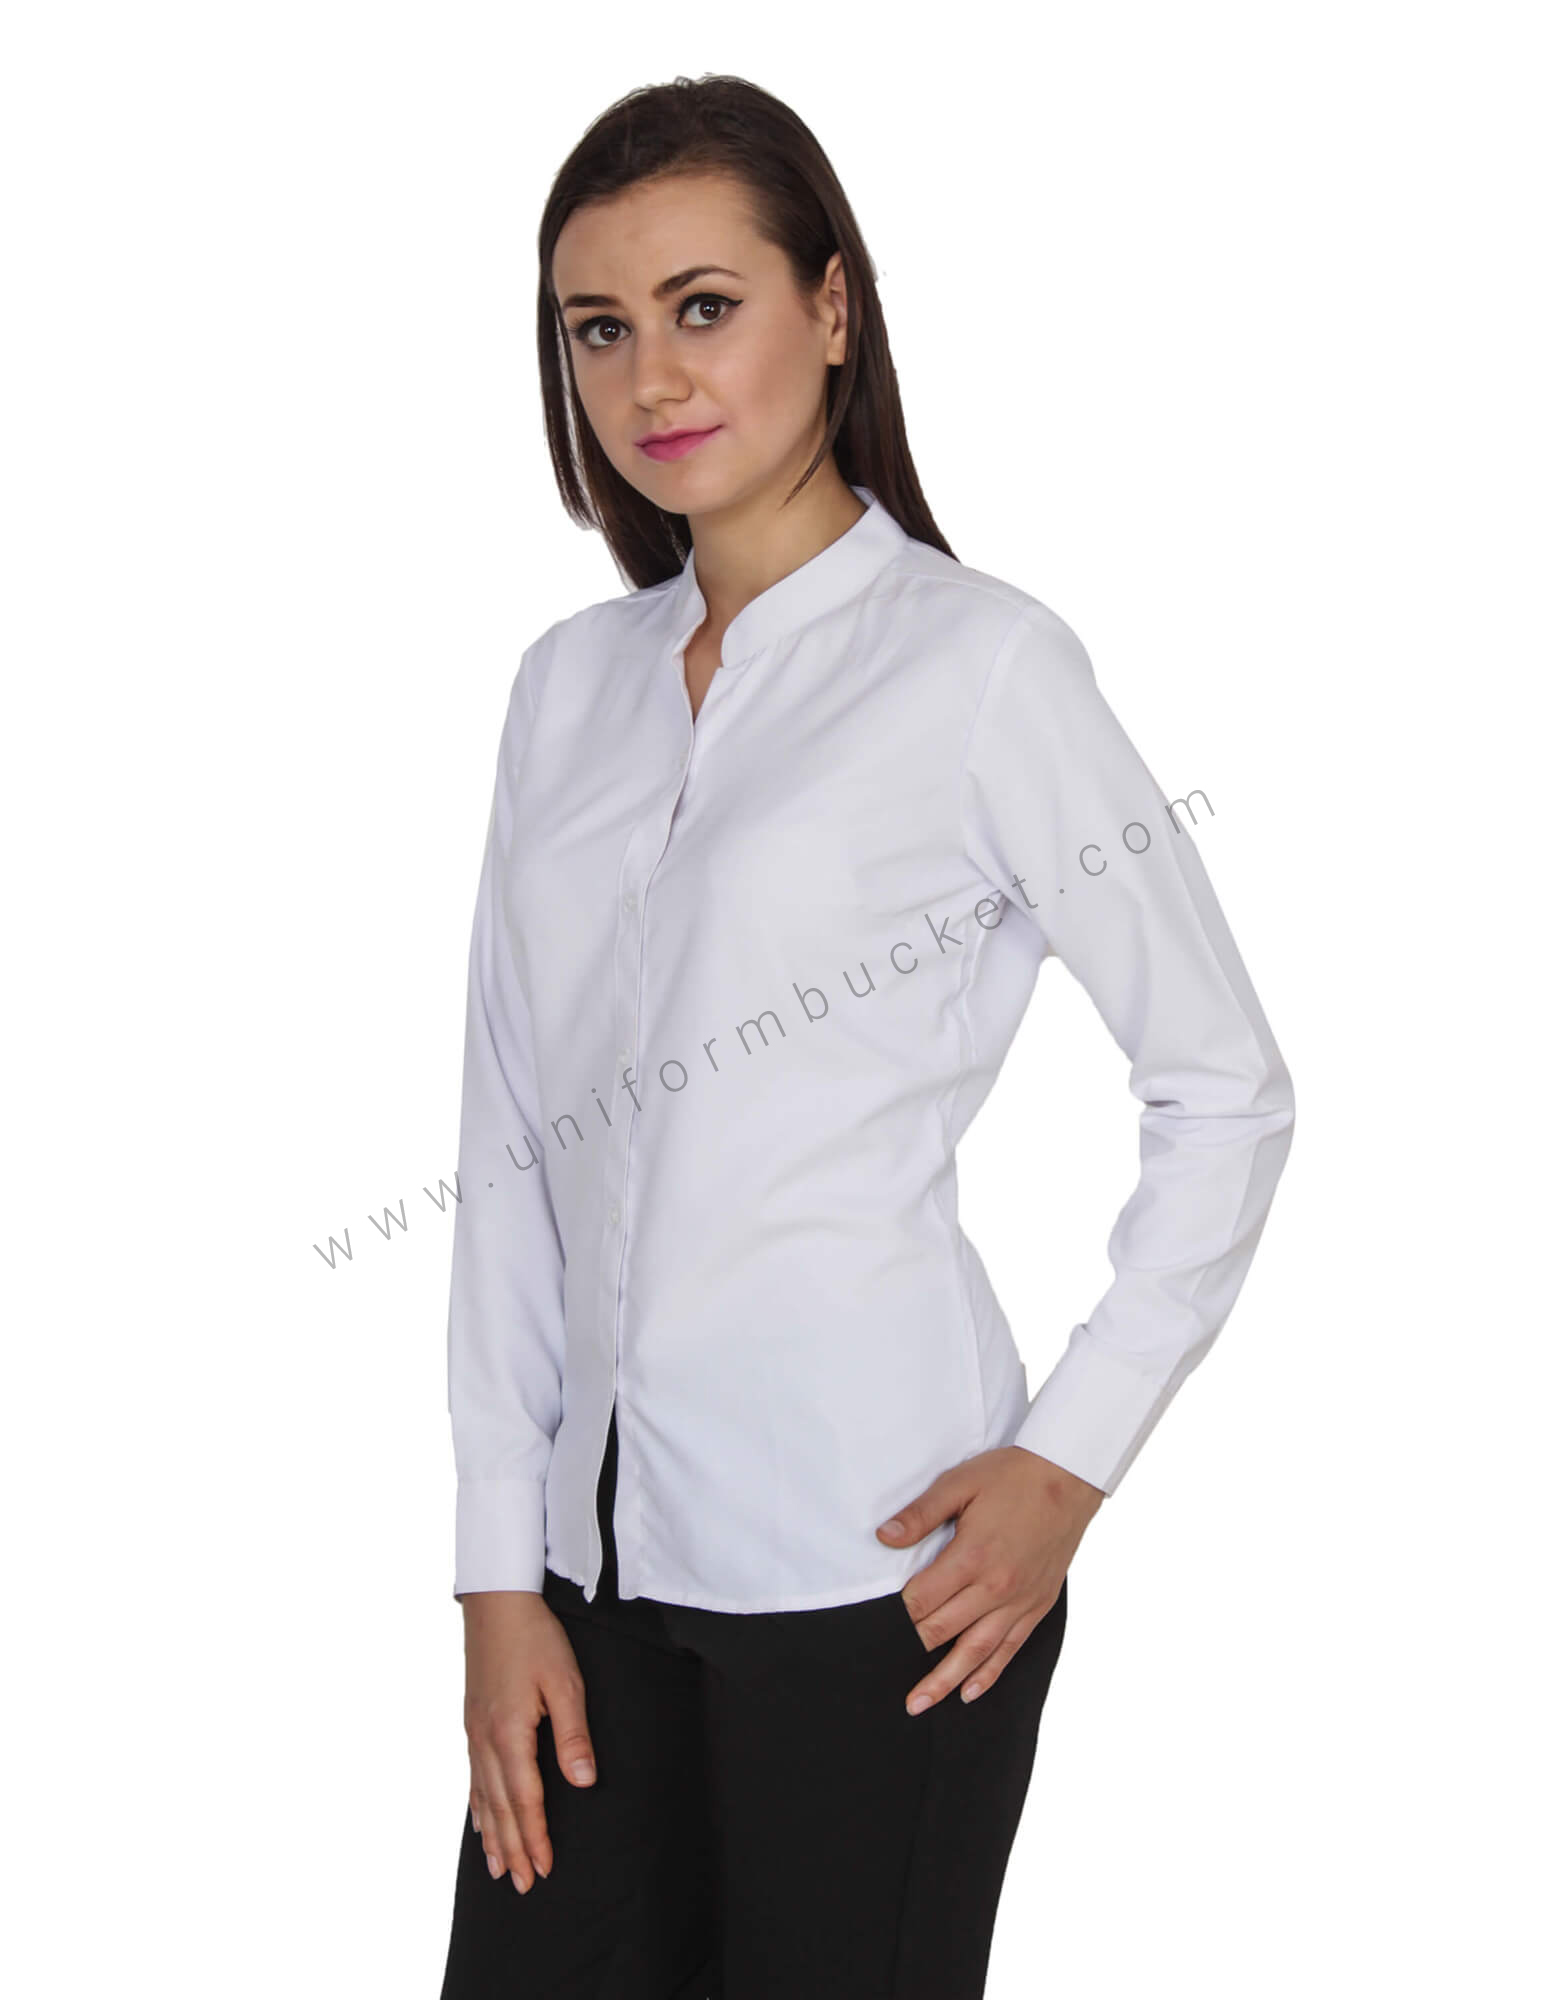 Formal White Uniform Shirt